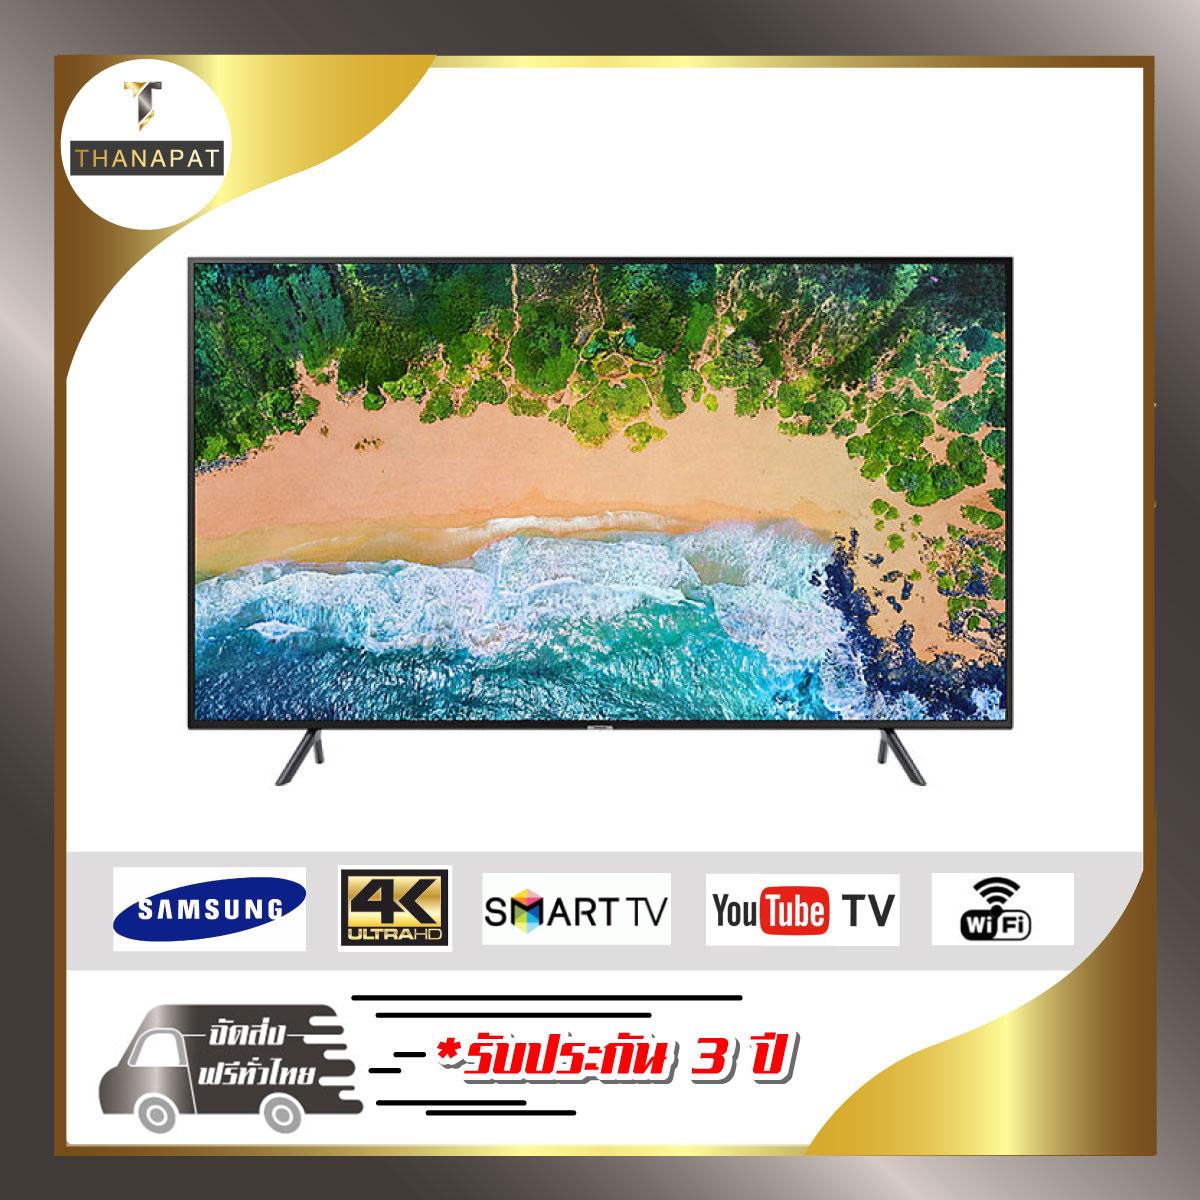 SAMSUNG Smart 4K UHD 43NU7100 (2018)TV 43 นิ้ว รุ่น 43NU7100